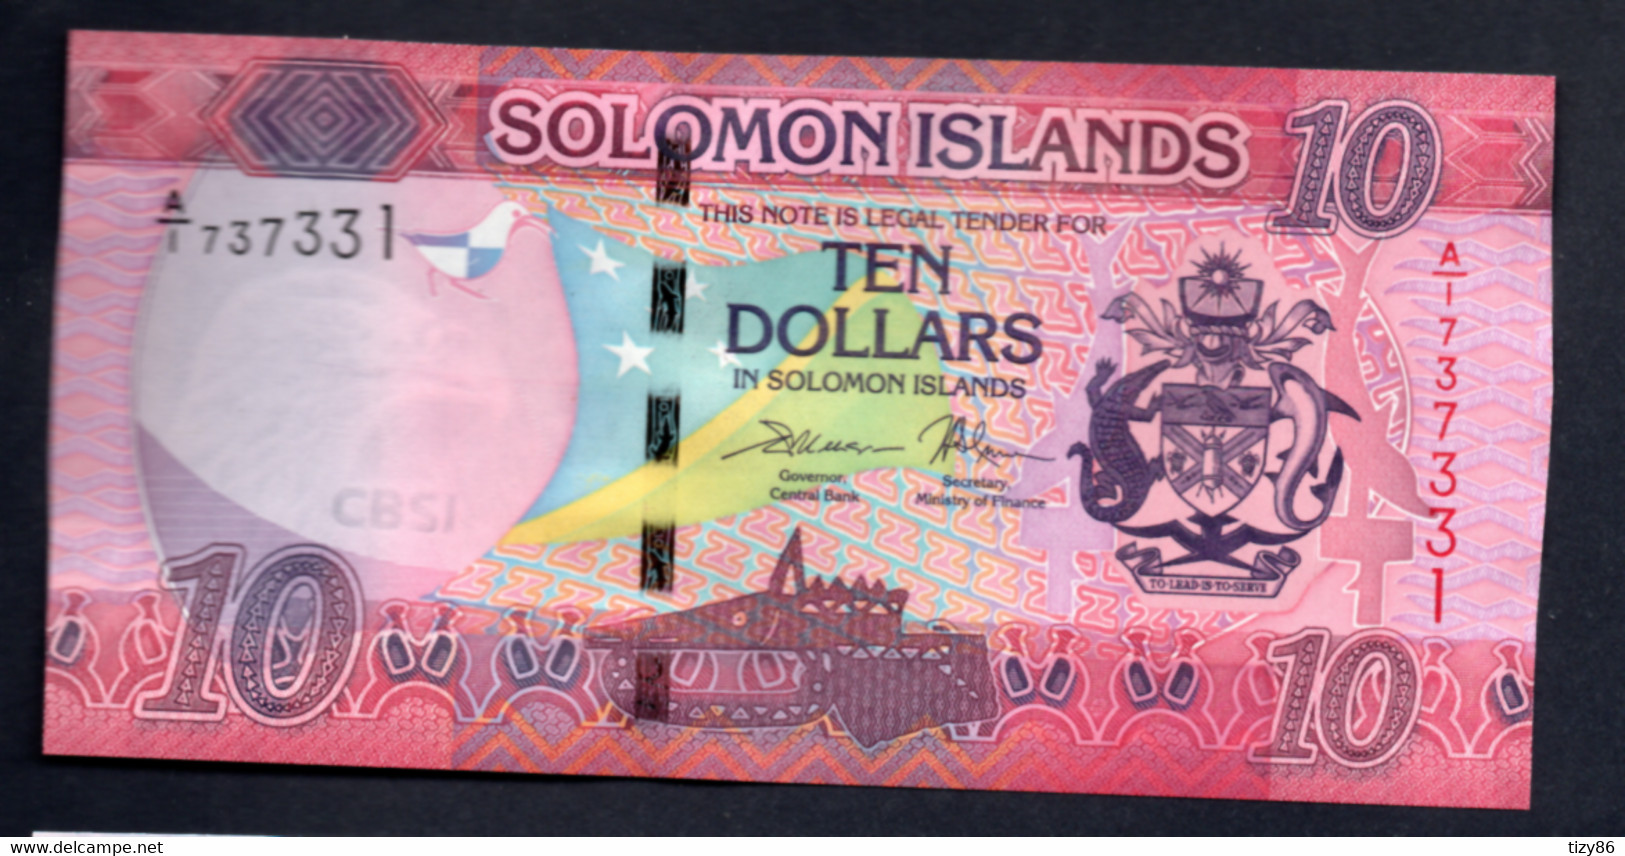 Banconota Solomon Islands - 10 Dollars 2017 (UNC/FDS) - Isola Salomon